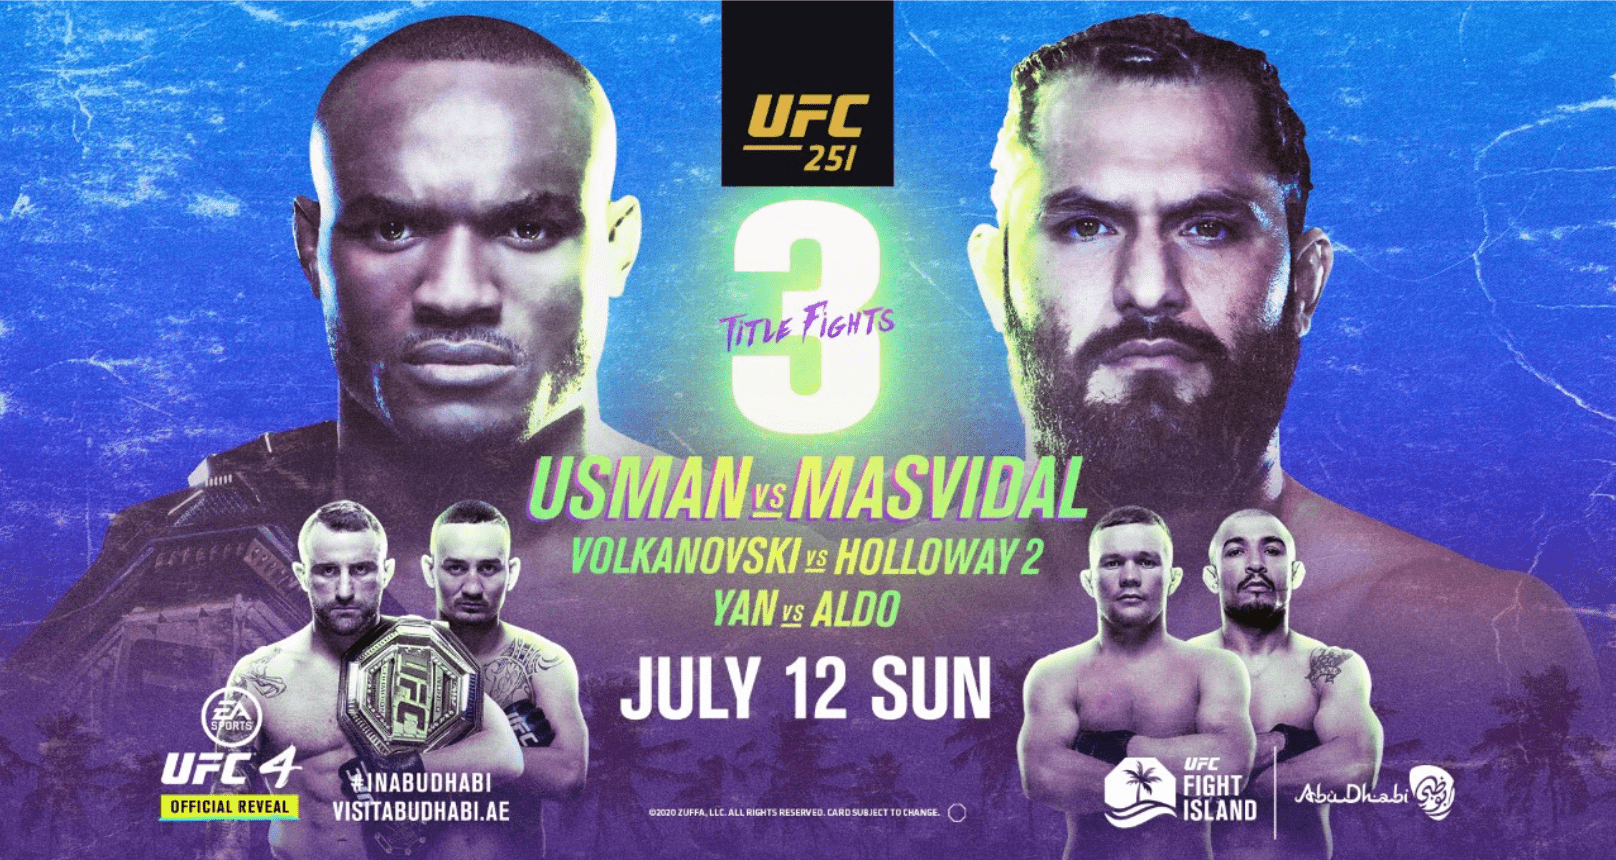 UFC 251: Usman vs Masvidal Results